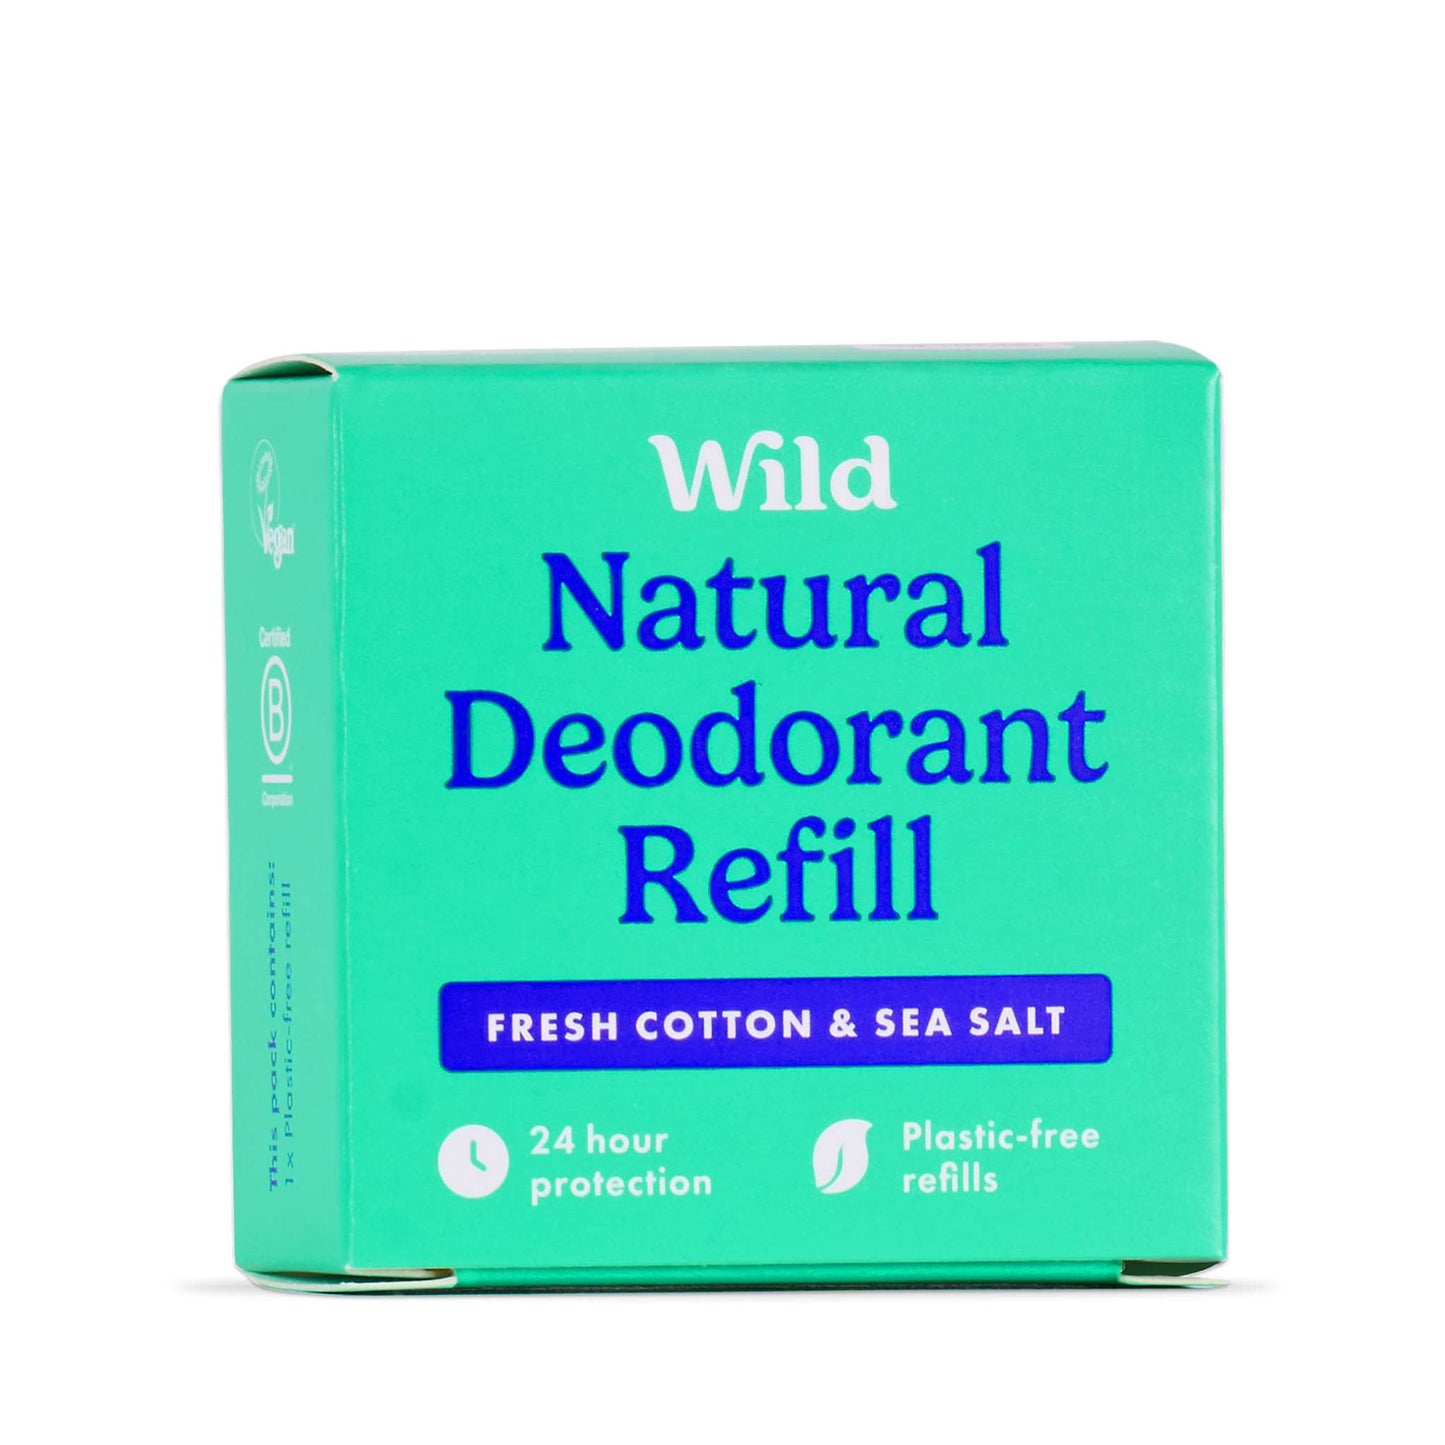 Wild Deodorant Wild Fresh Cotton & Sea Salt Natural Deodorant Refill 43g